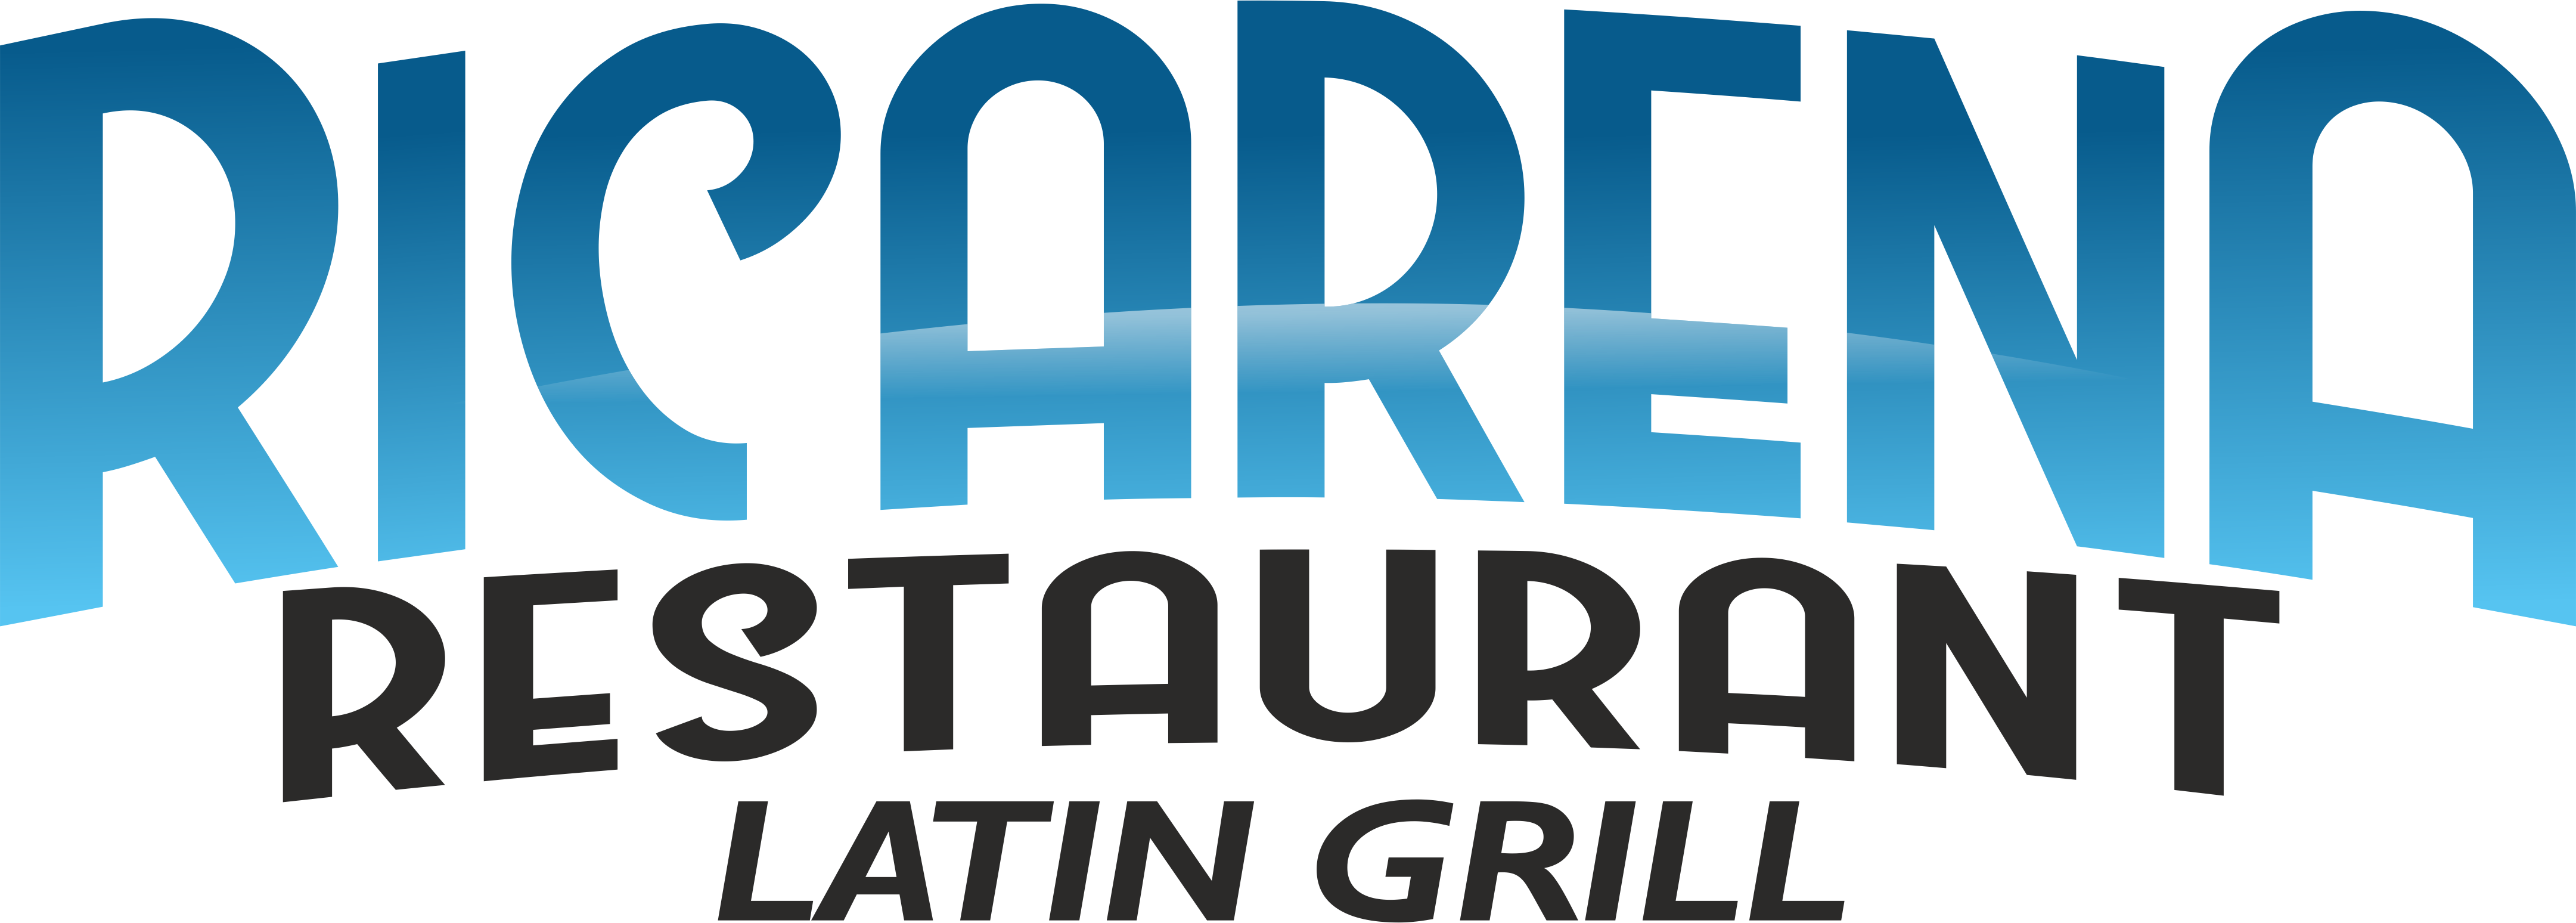 Ricarena Latin Grill logo